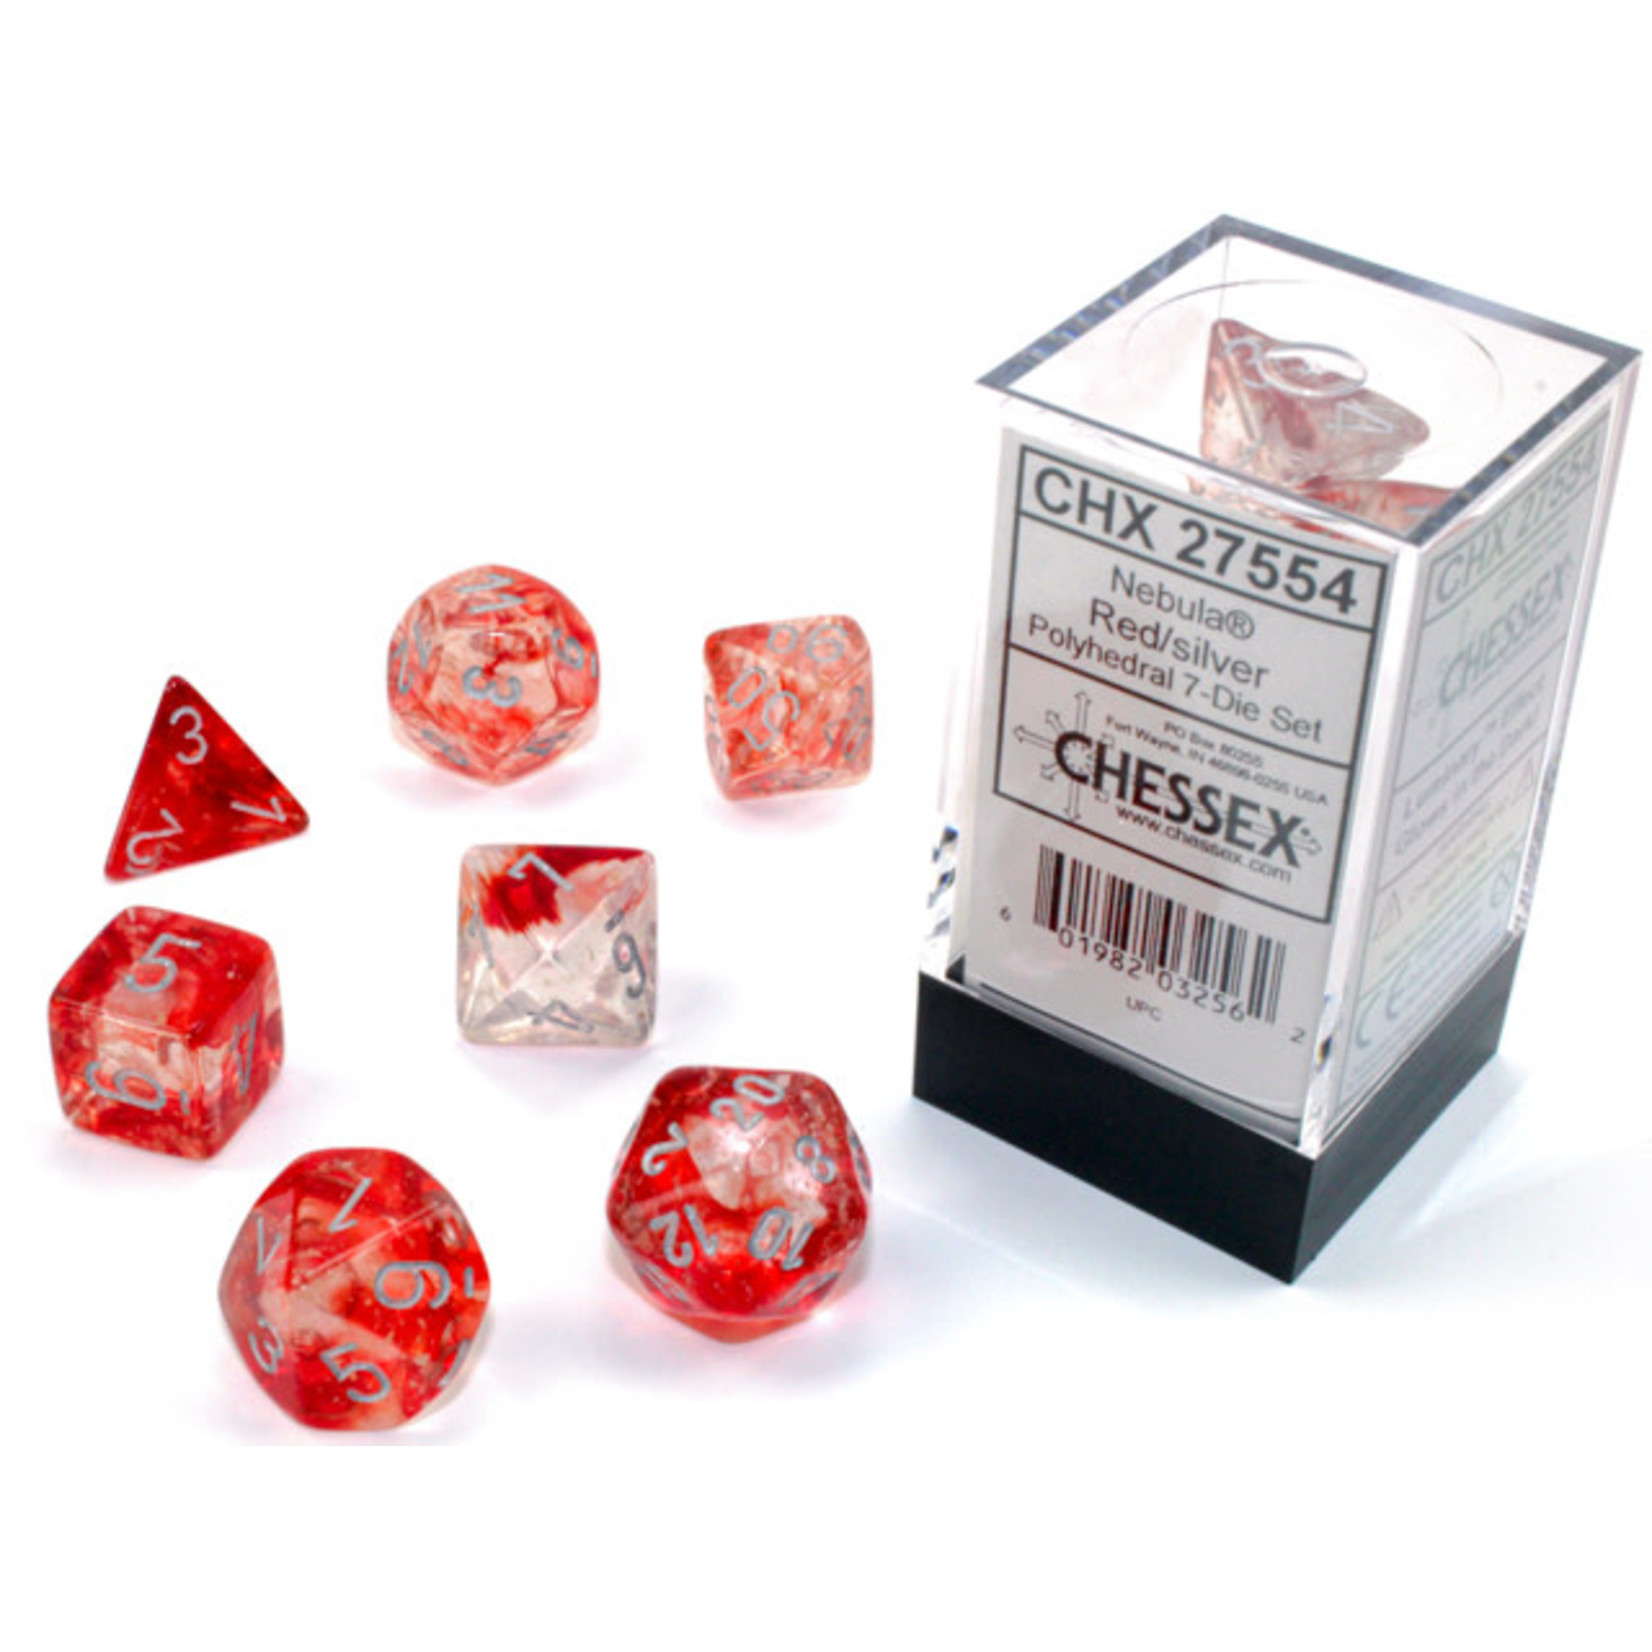 Chessex Dice RPG 27554 7pc Nebula Red/Silver Luminary